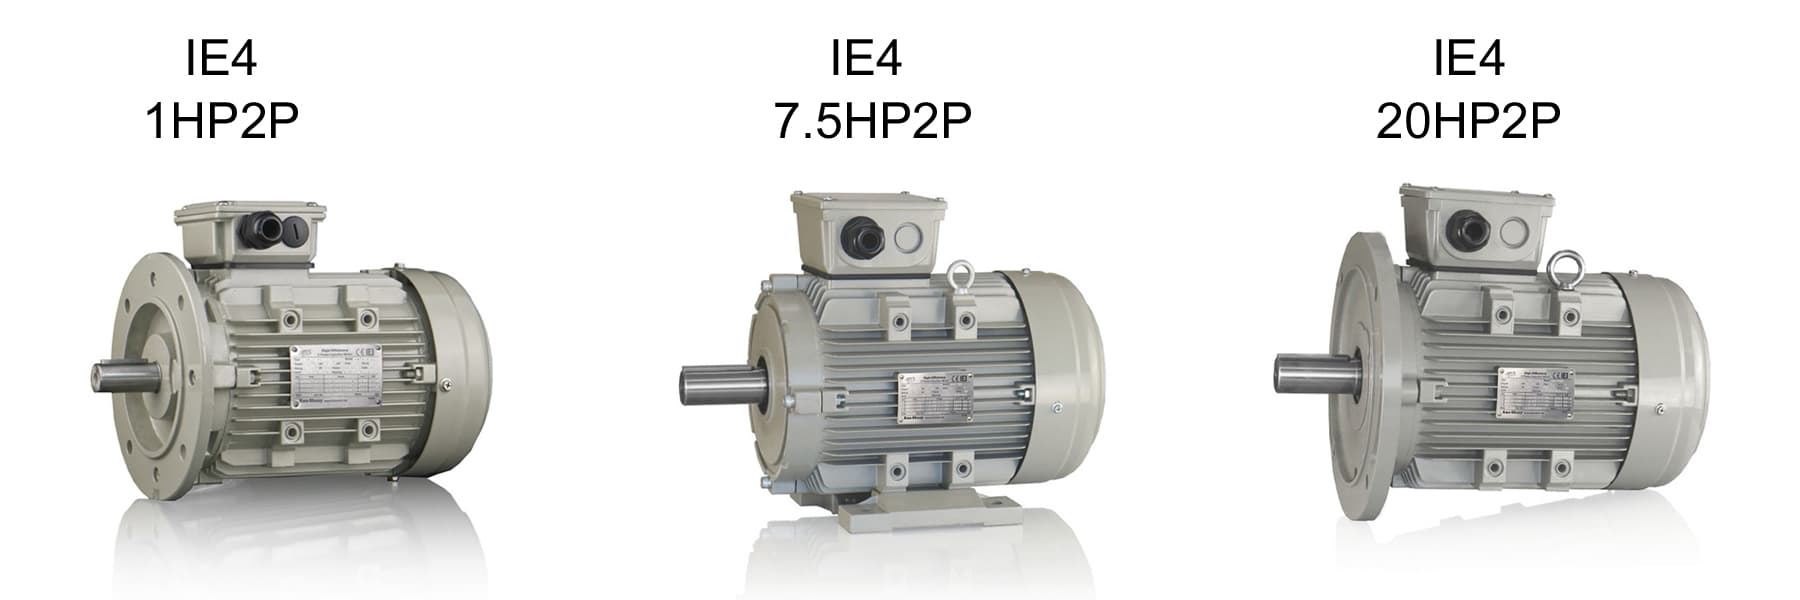 IE4 motor